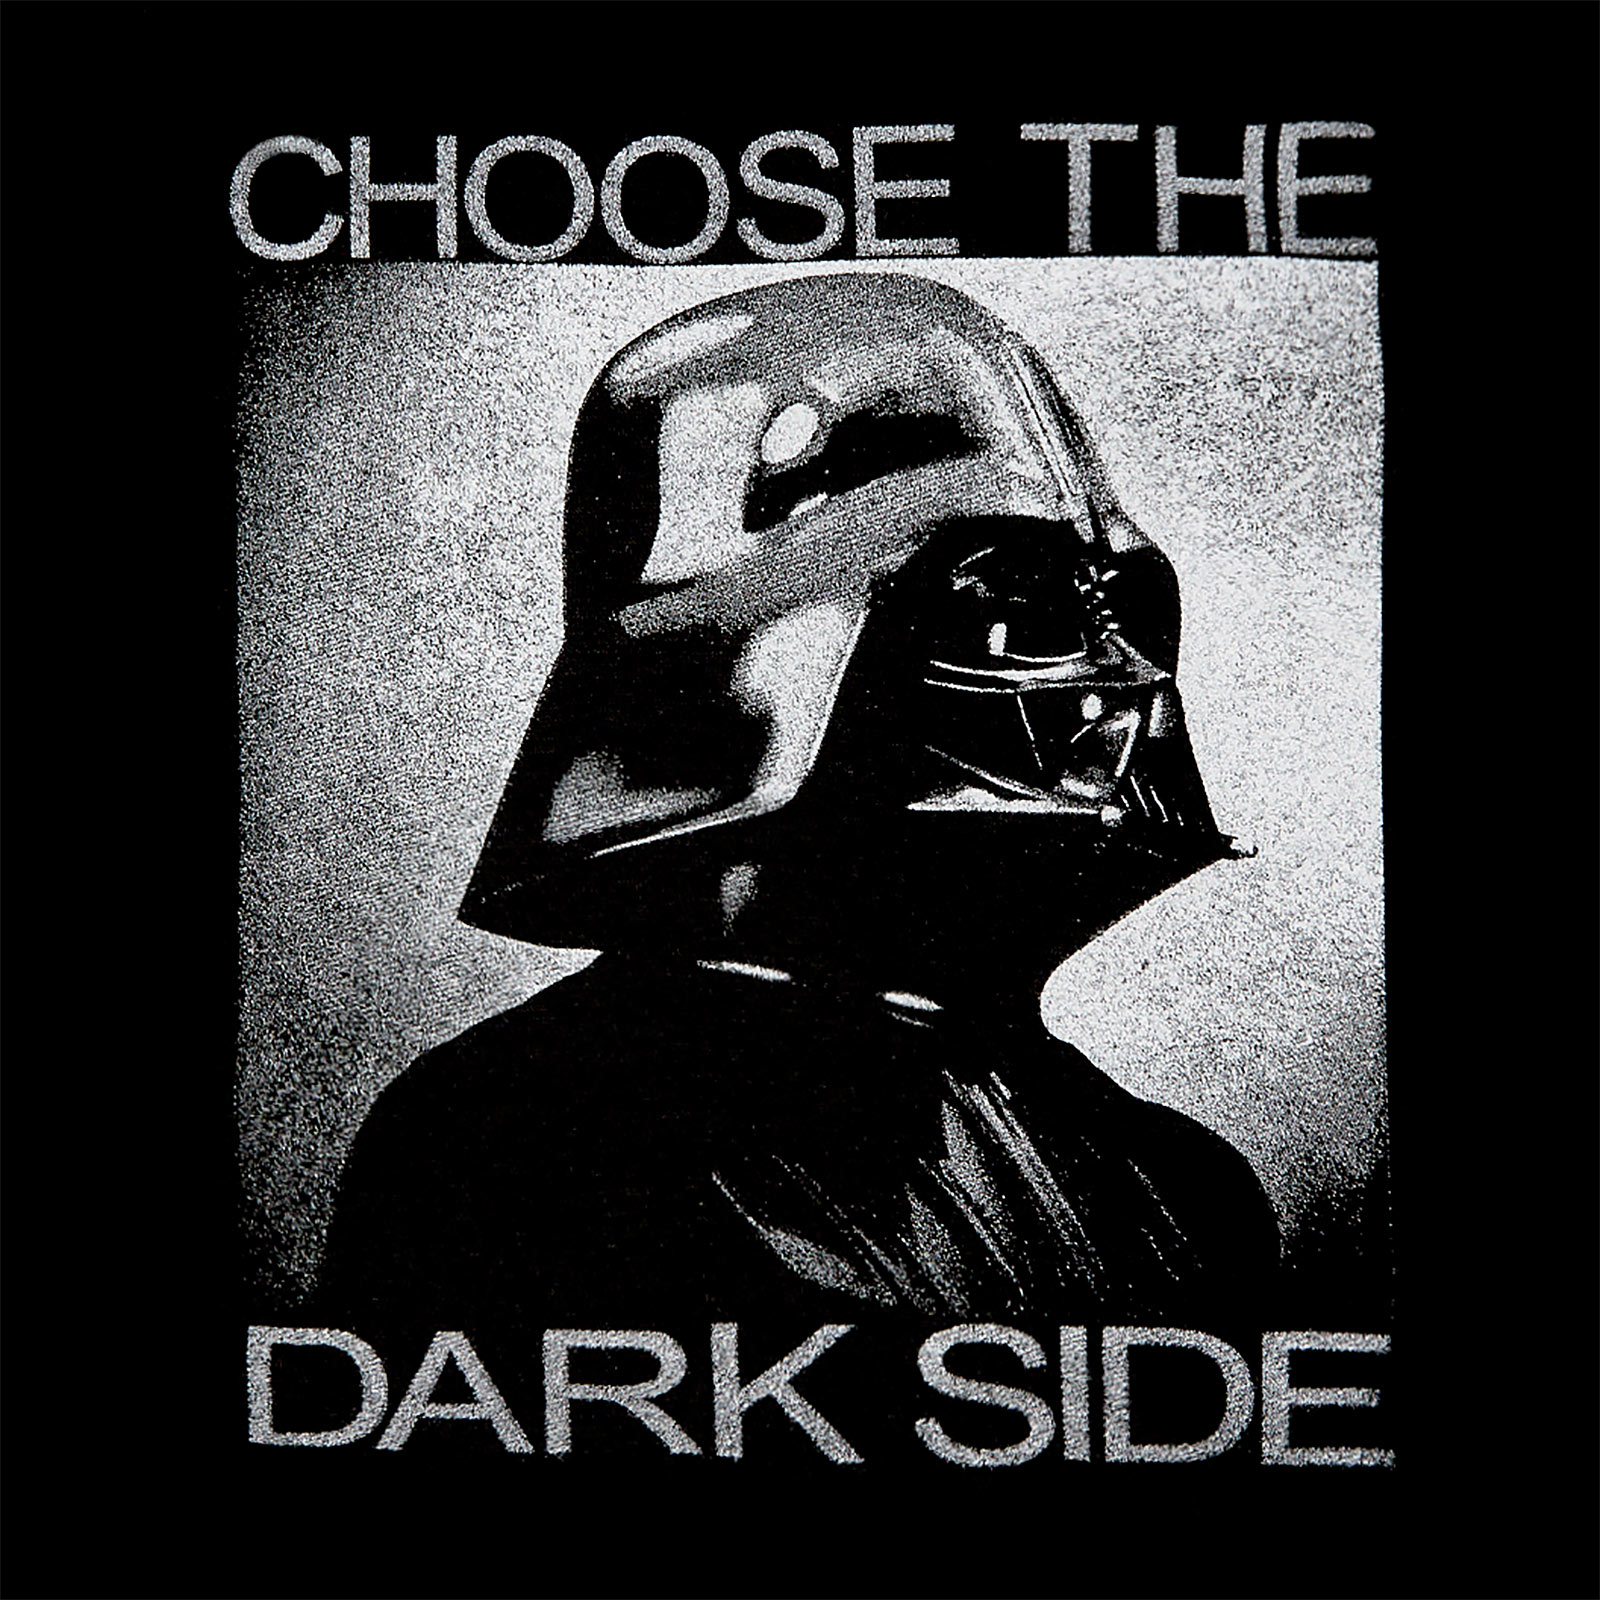 Star Wars - Darth Vader Choisissez le Hoodie noir du côté obscur